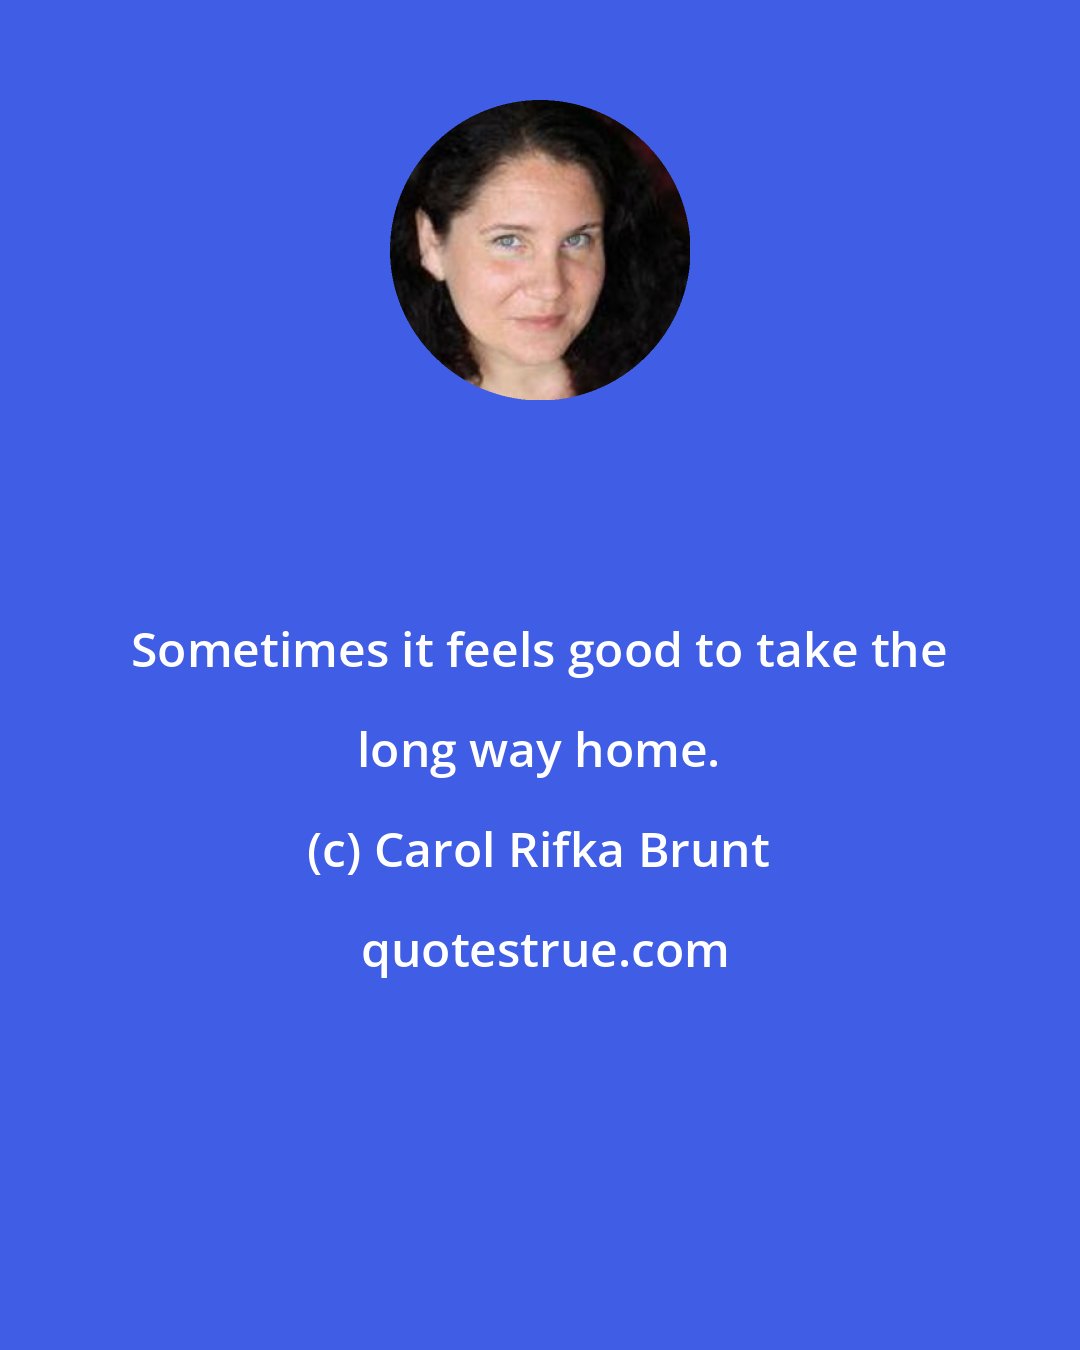 Carol Rifka Brunt: Sometimes it feels good to take the long way home.